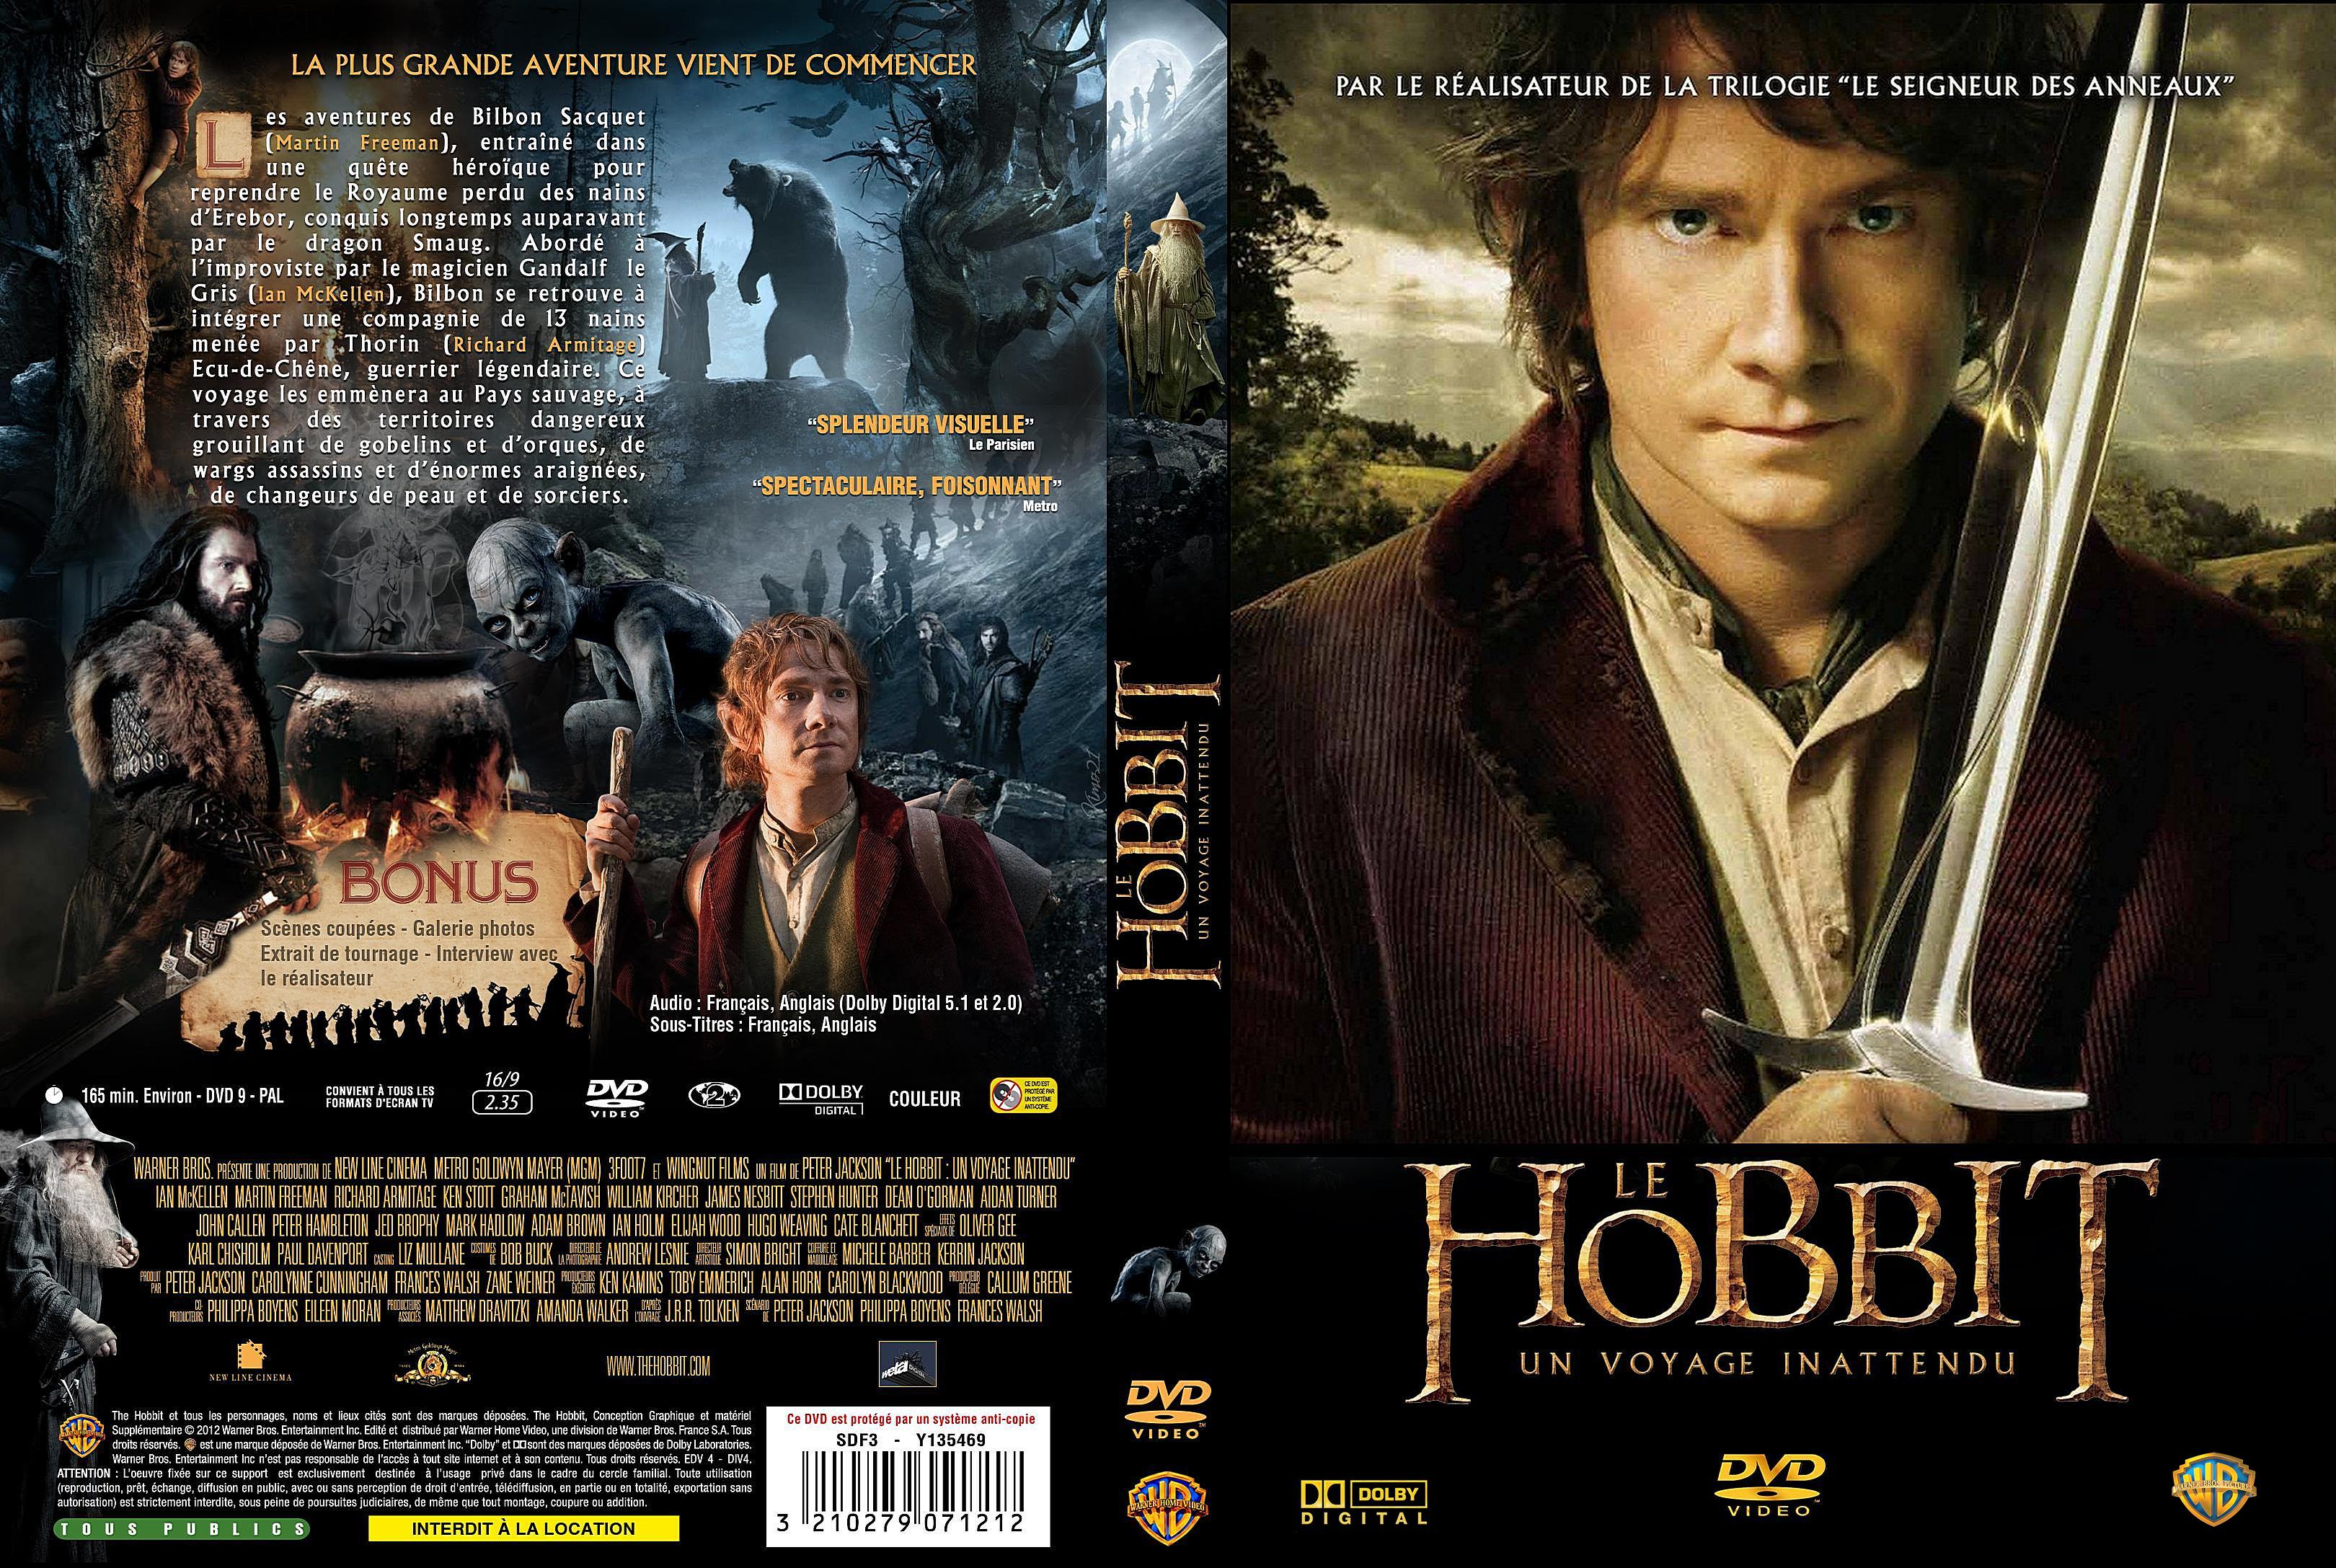 Jaquette DVD Le Hobbit un voyage inattendu custom v3